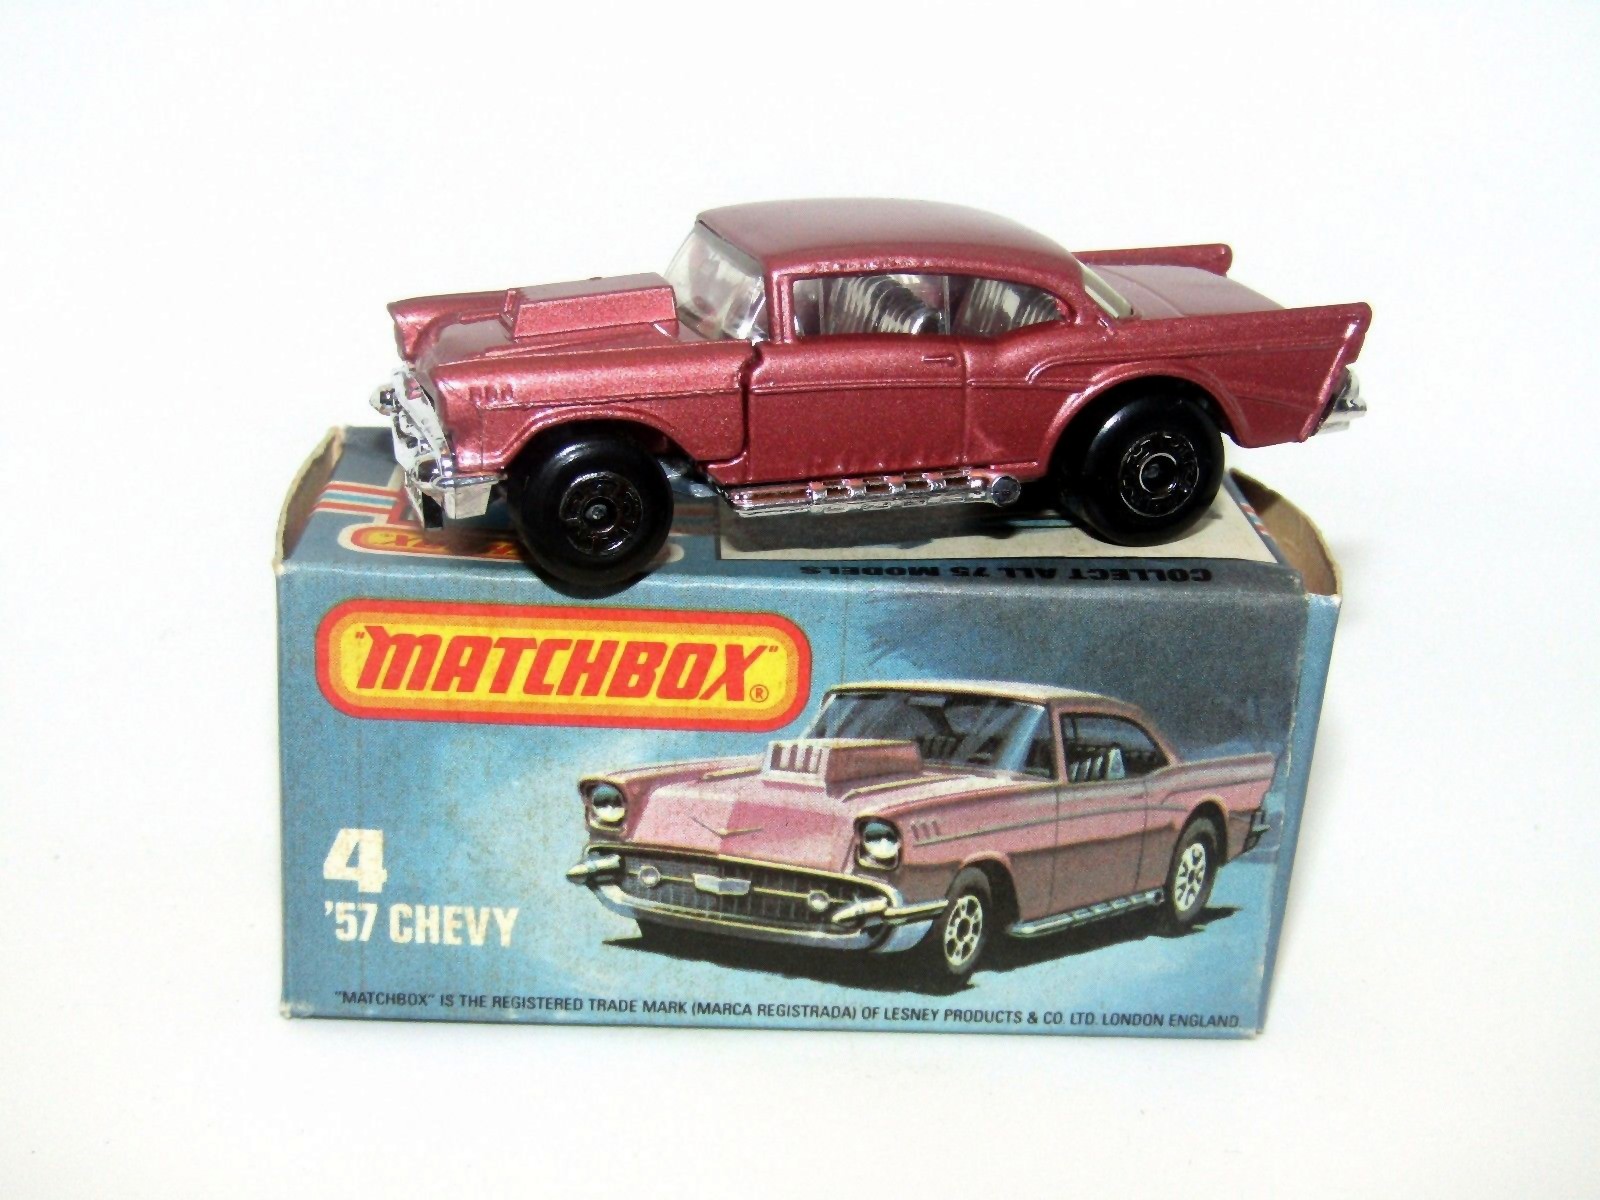 57 Chevy | Matchbox Cars Wiki | Fandom